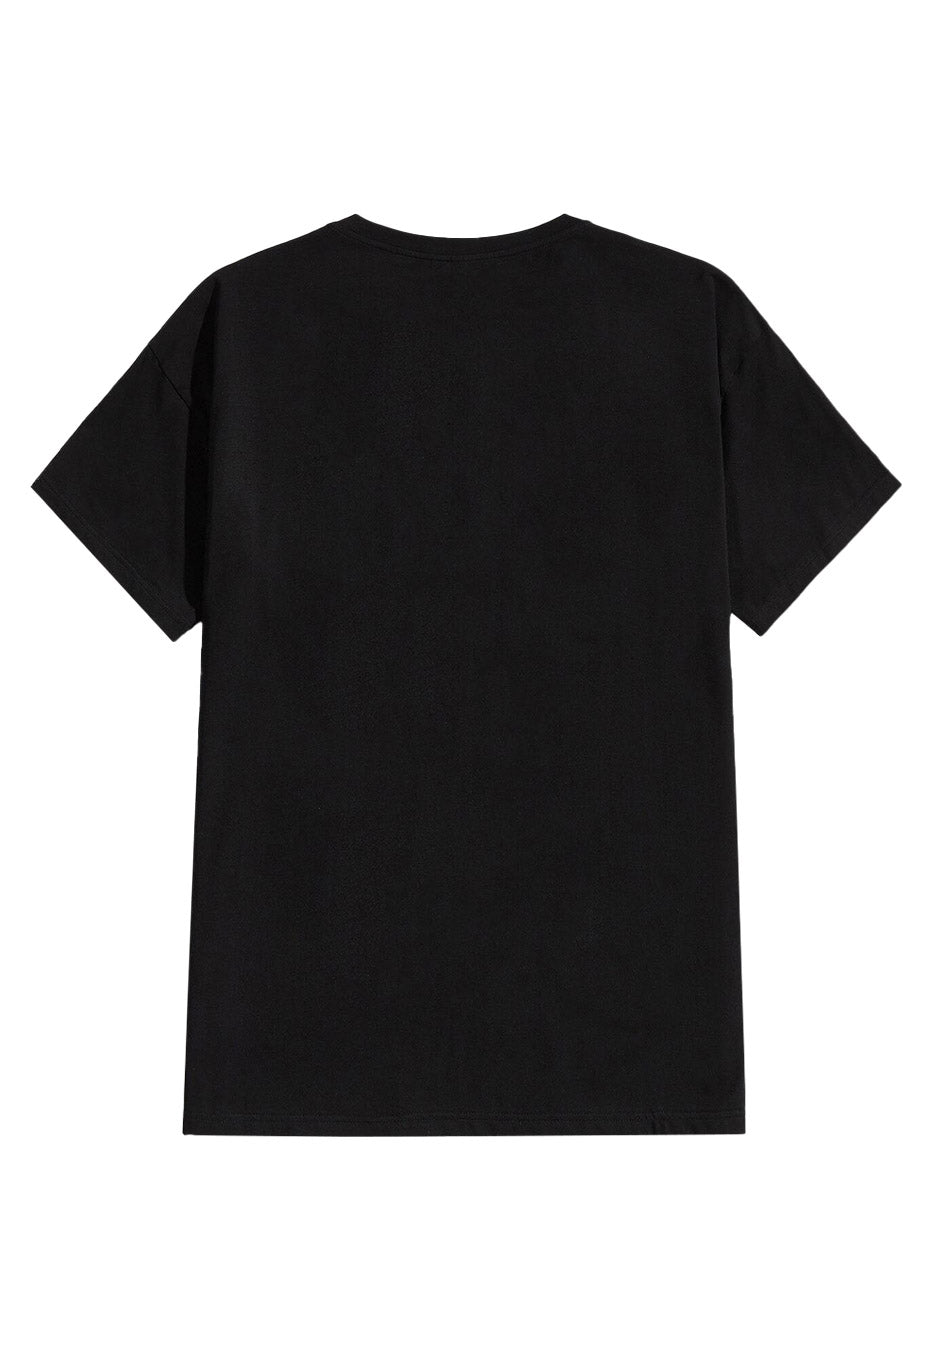 Ozzy Osbourne - Perfectly Ordinary Leak - T-Shirt